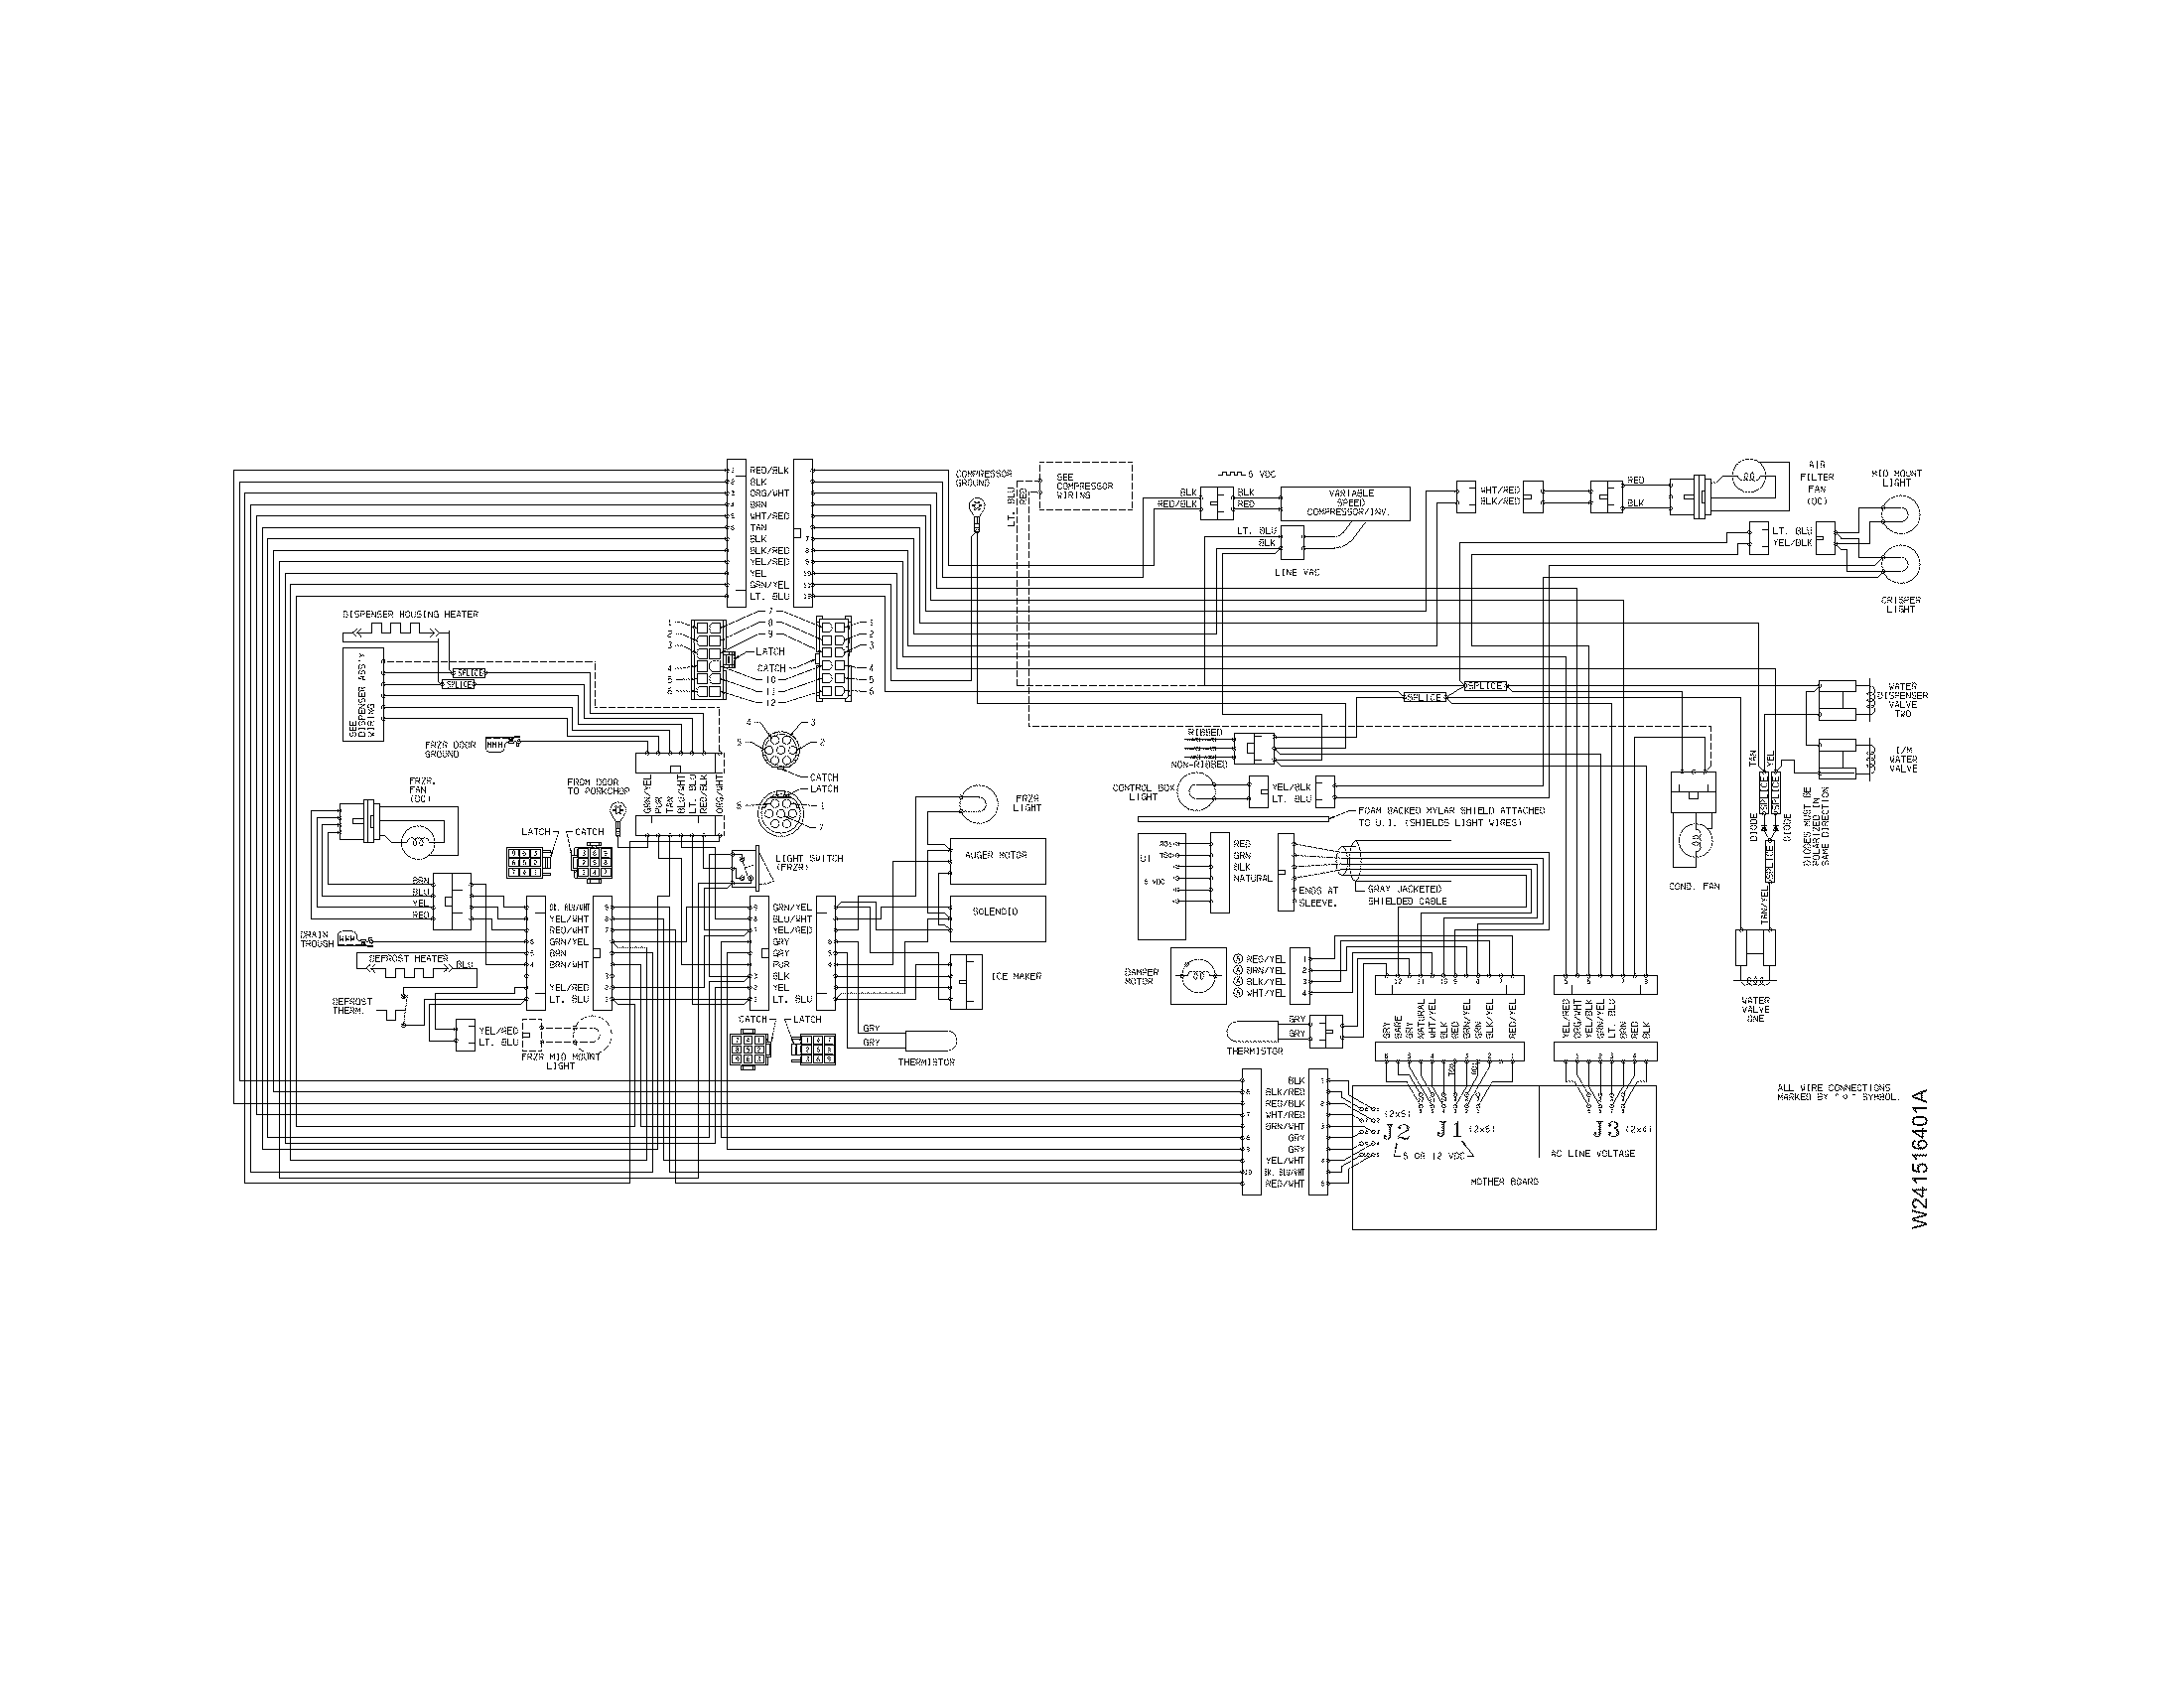 480/230 industrial overhead crane wiring diagram